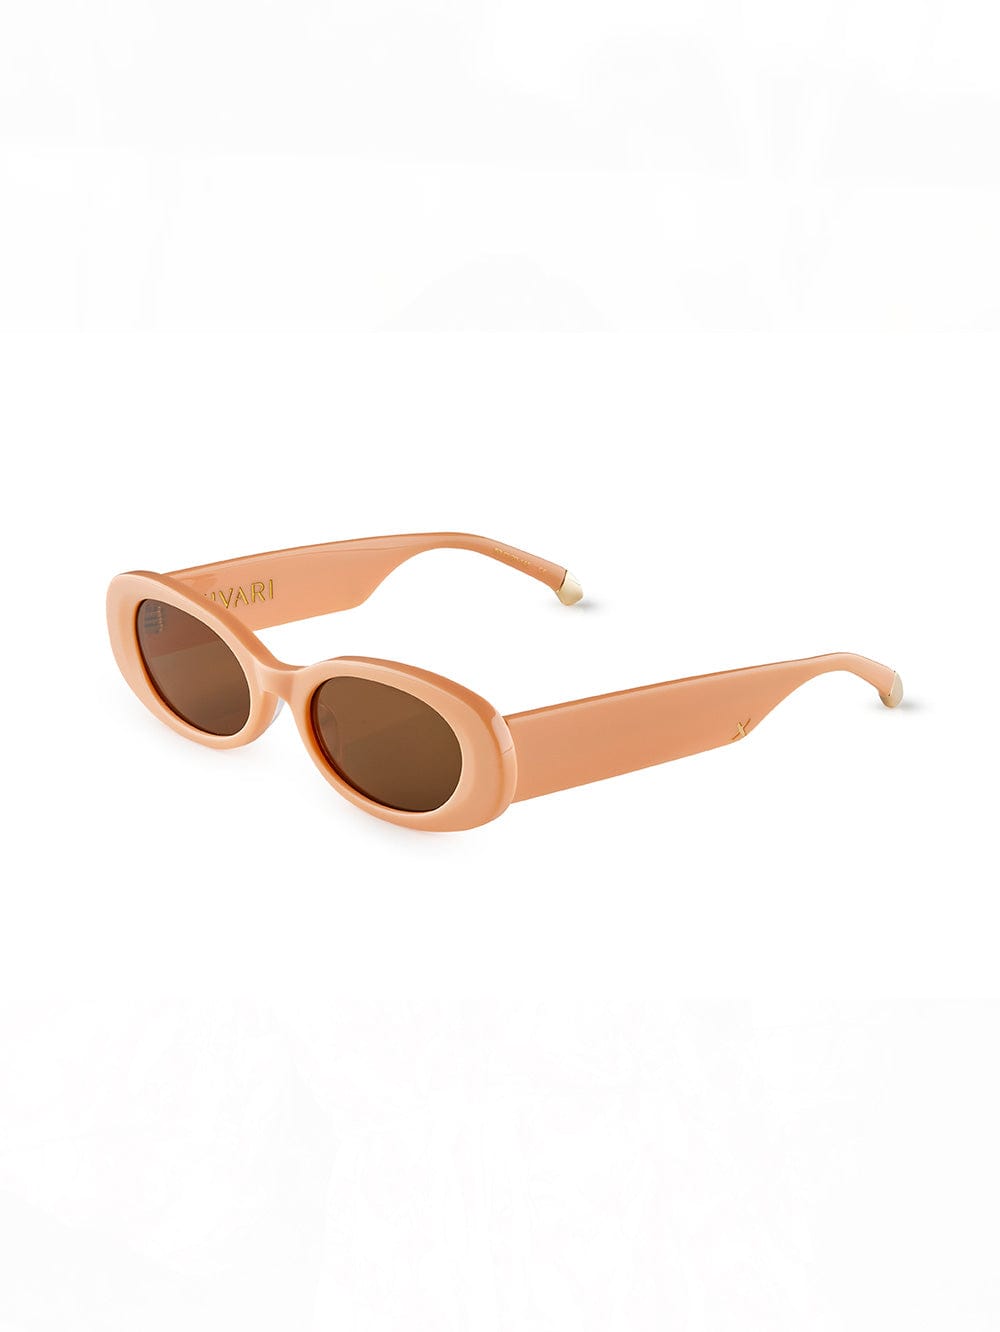 KIVARI X OXF - Citra Sunglasses